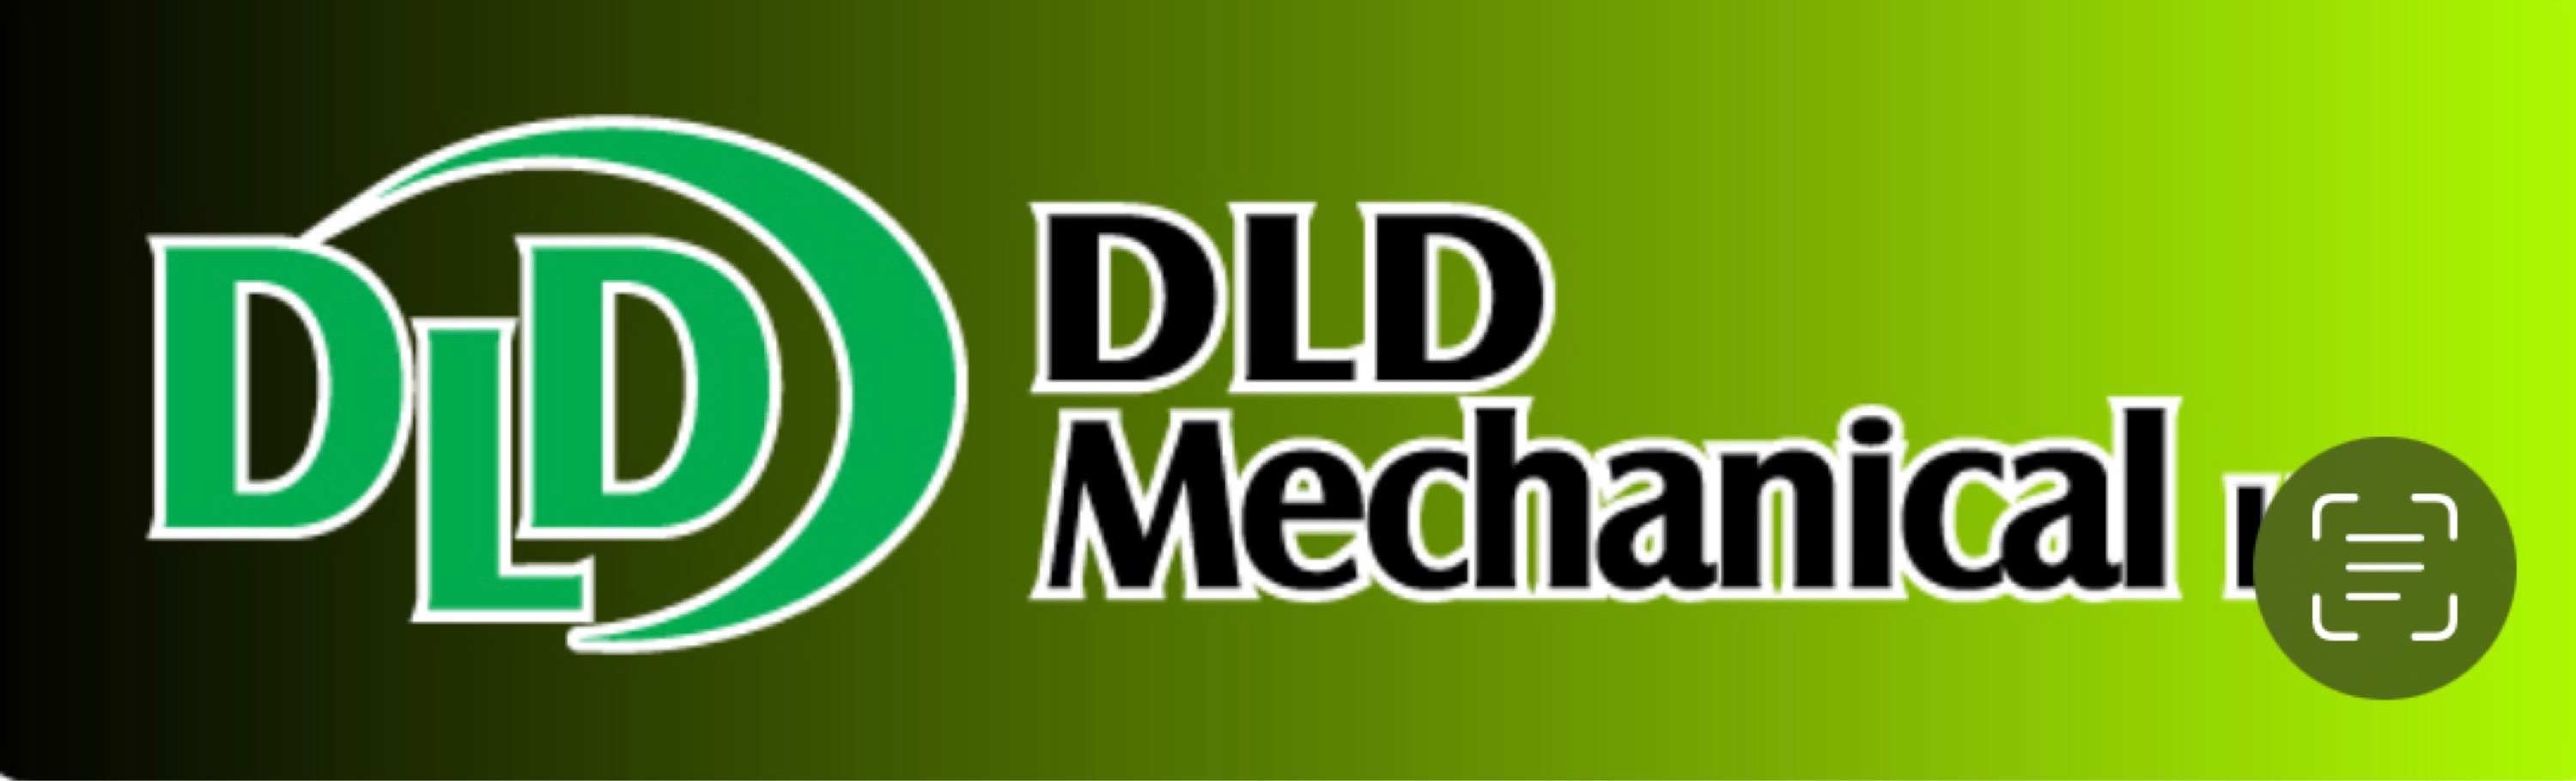 DLD Mechanical Logo